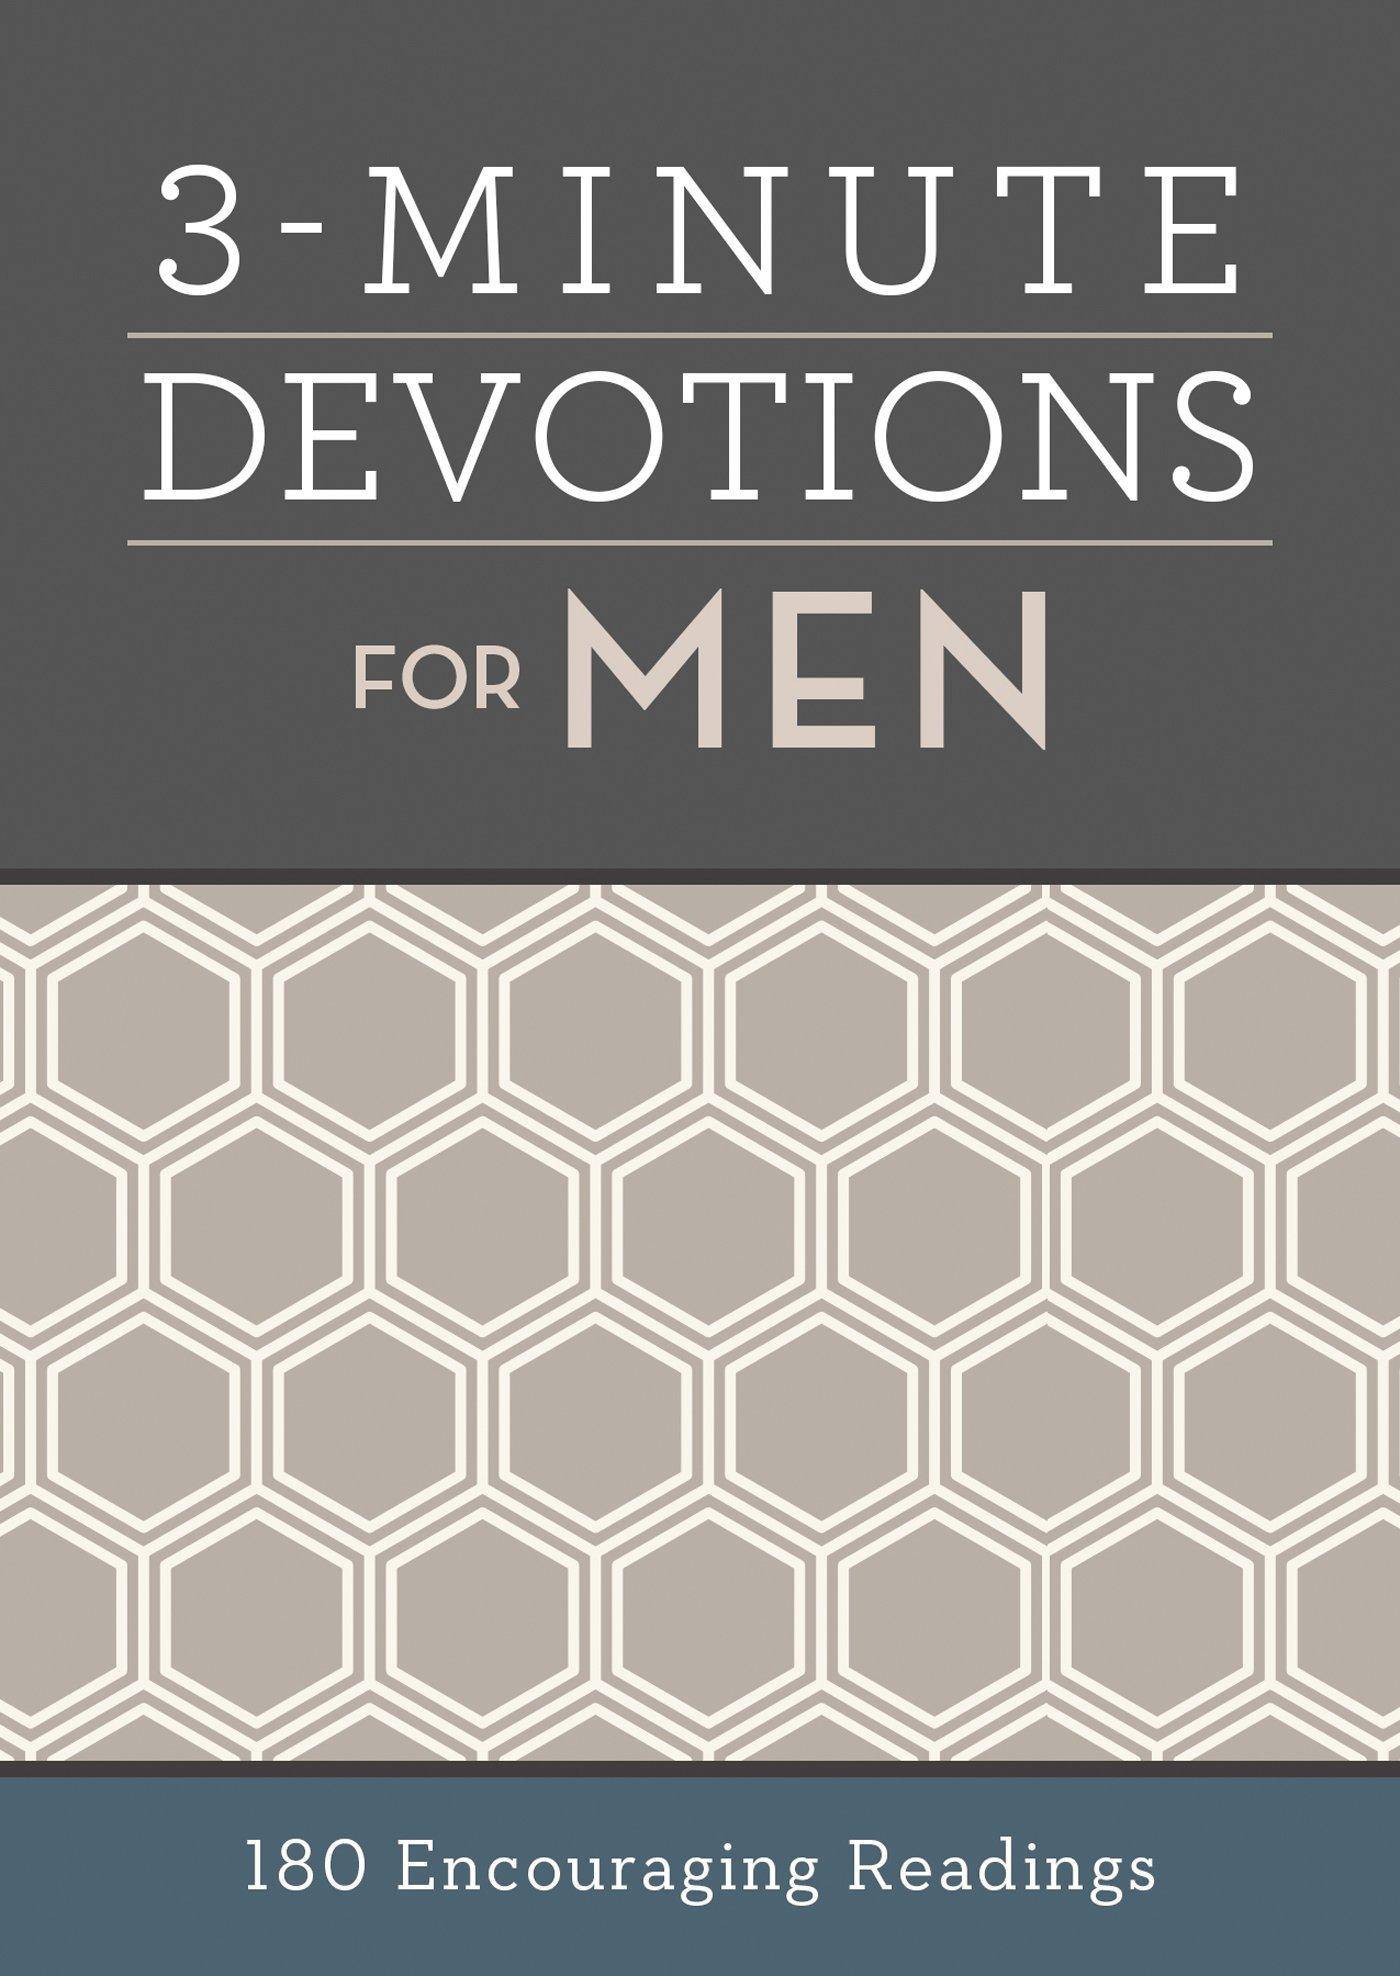 3-Minute Devotions for Men - SureShot Books Publishing LLC